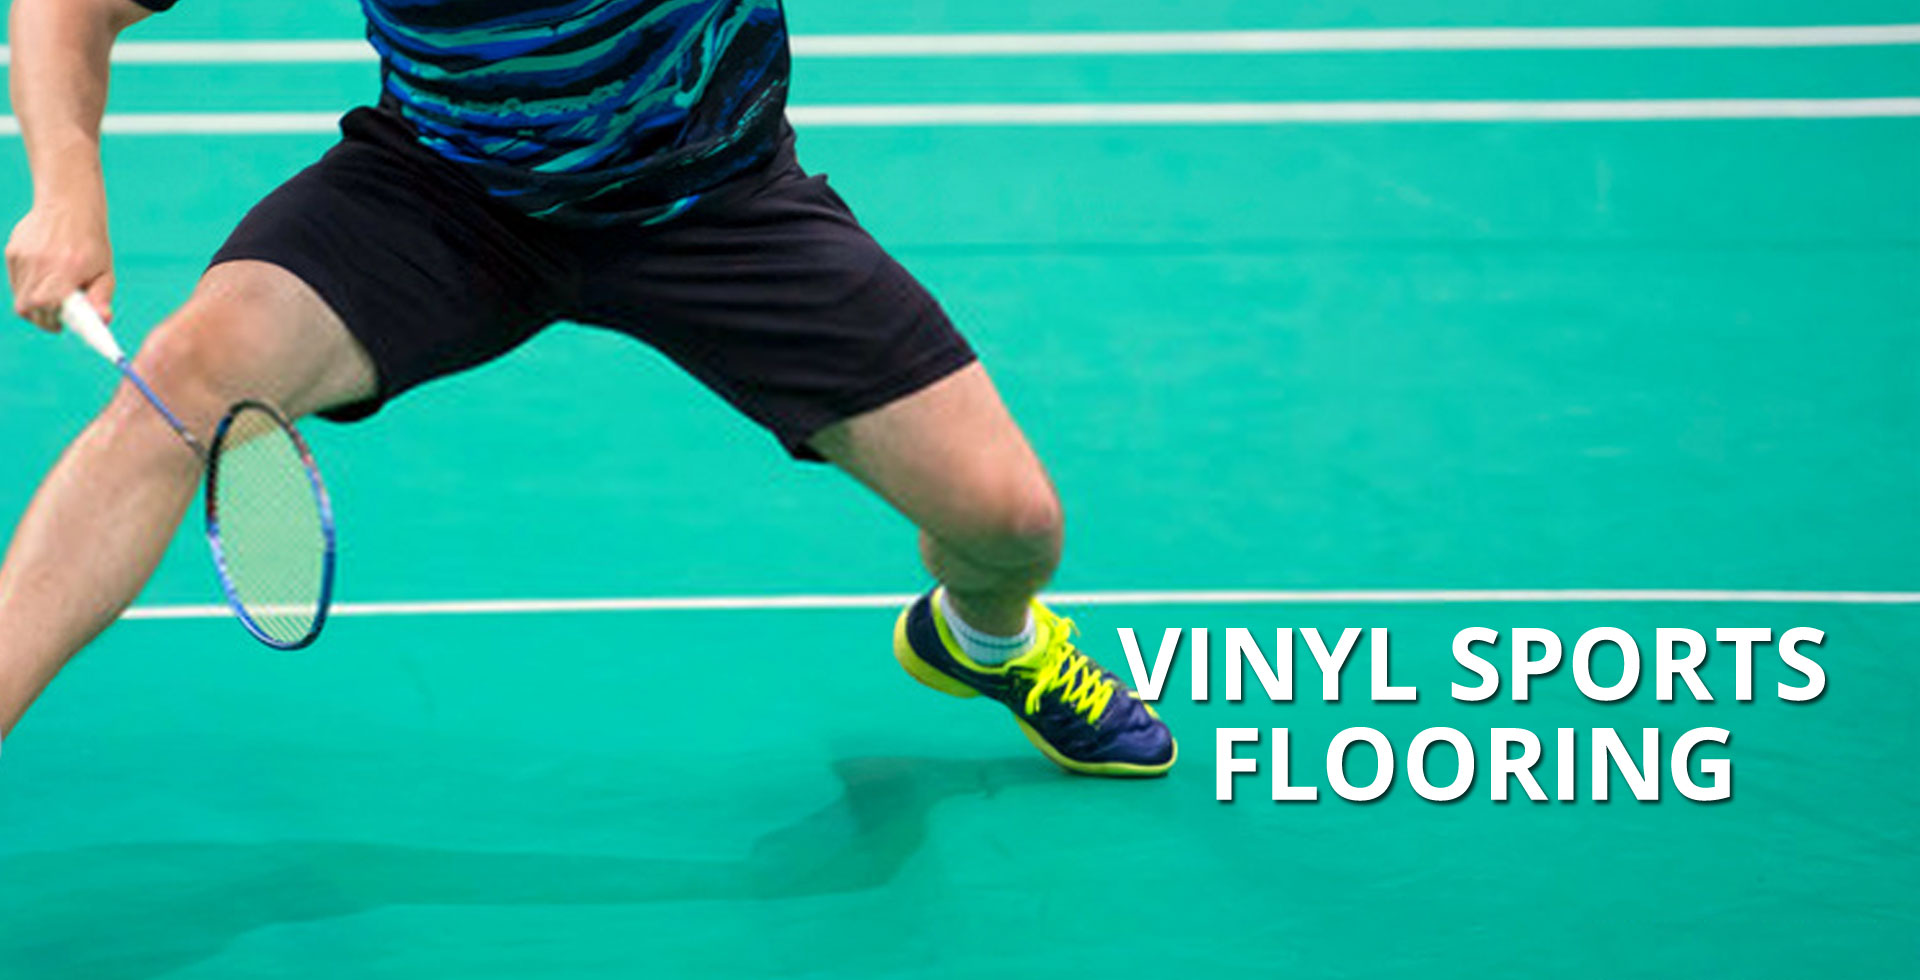 sunzone-vinyl-sports-flooring